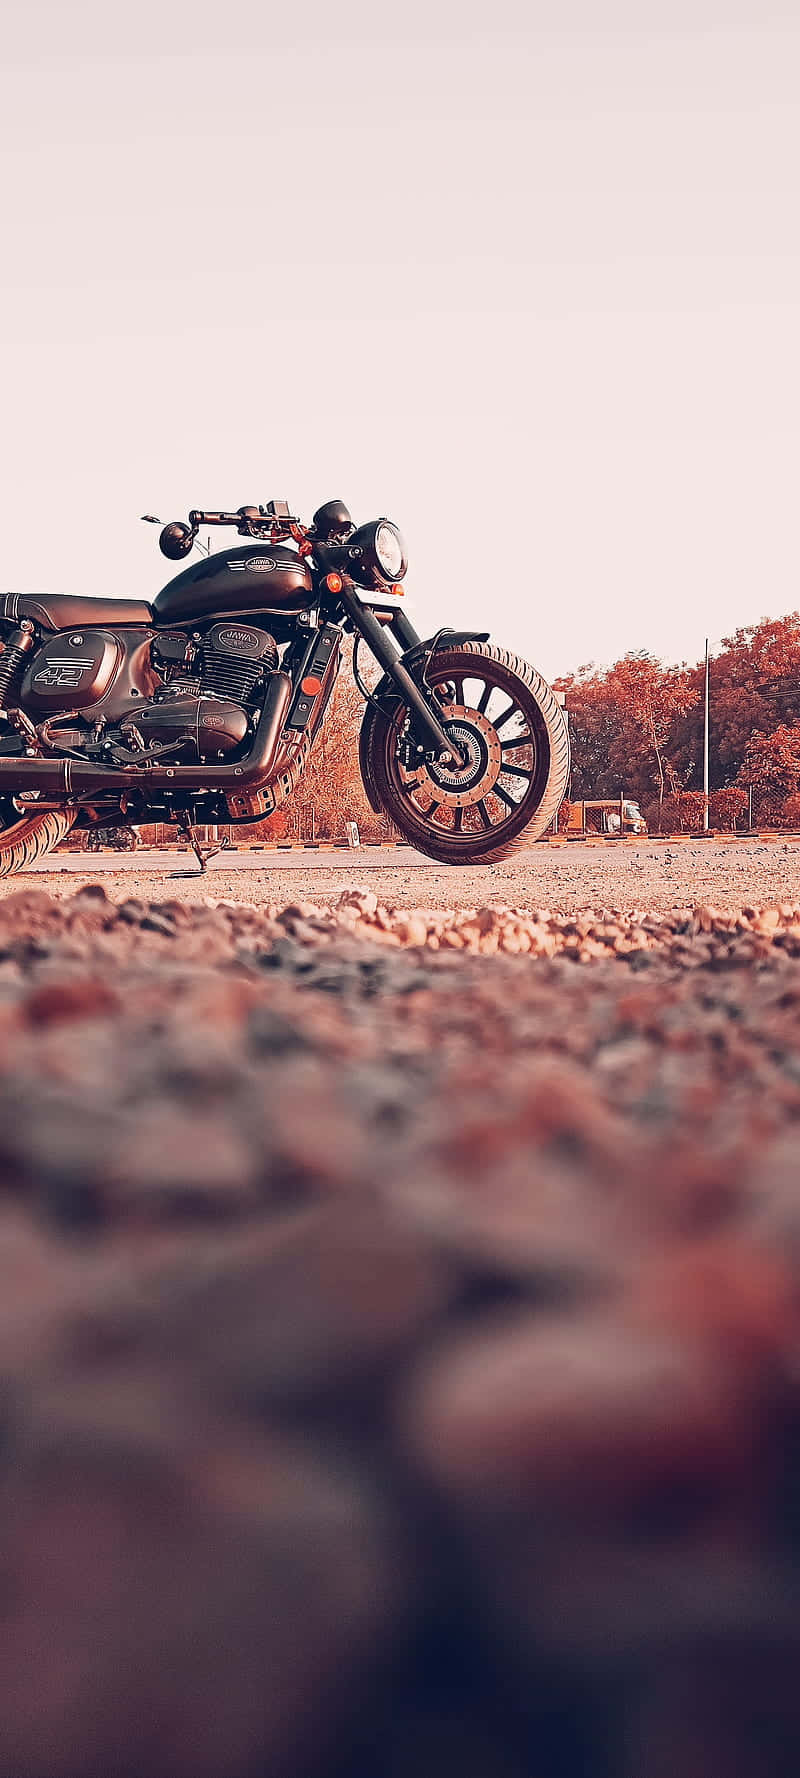 Classic Jawa Motorcycle Hitting The Road Wallpaper